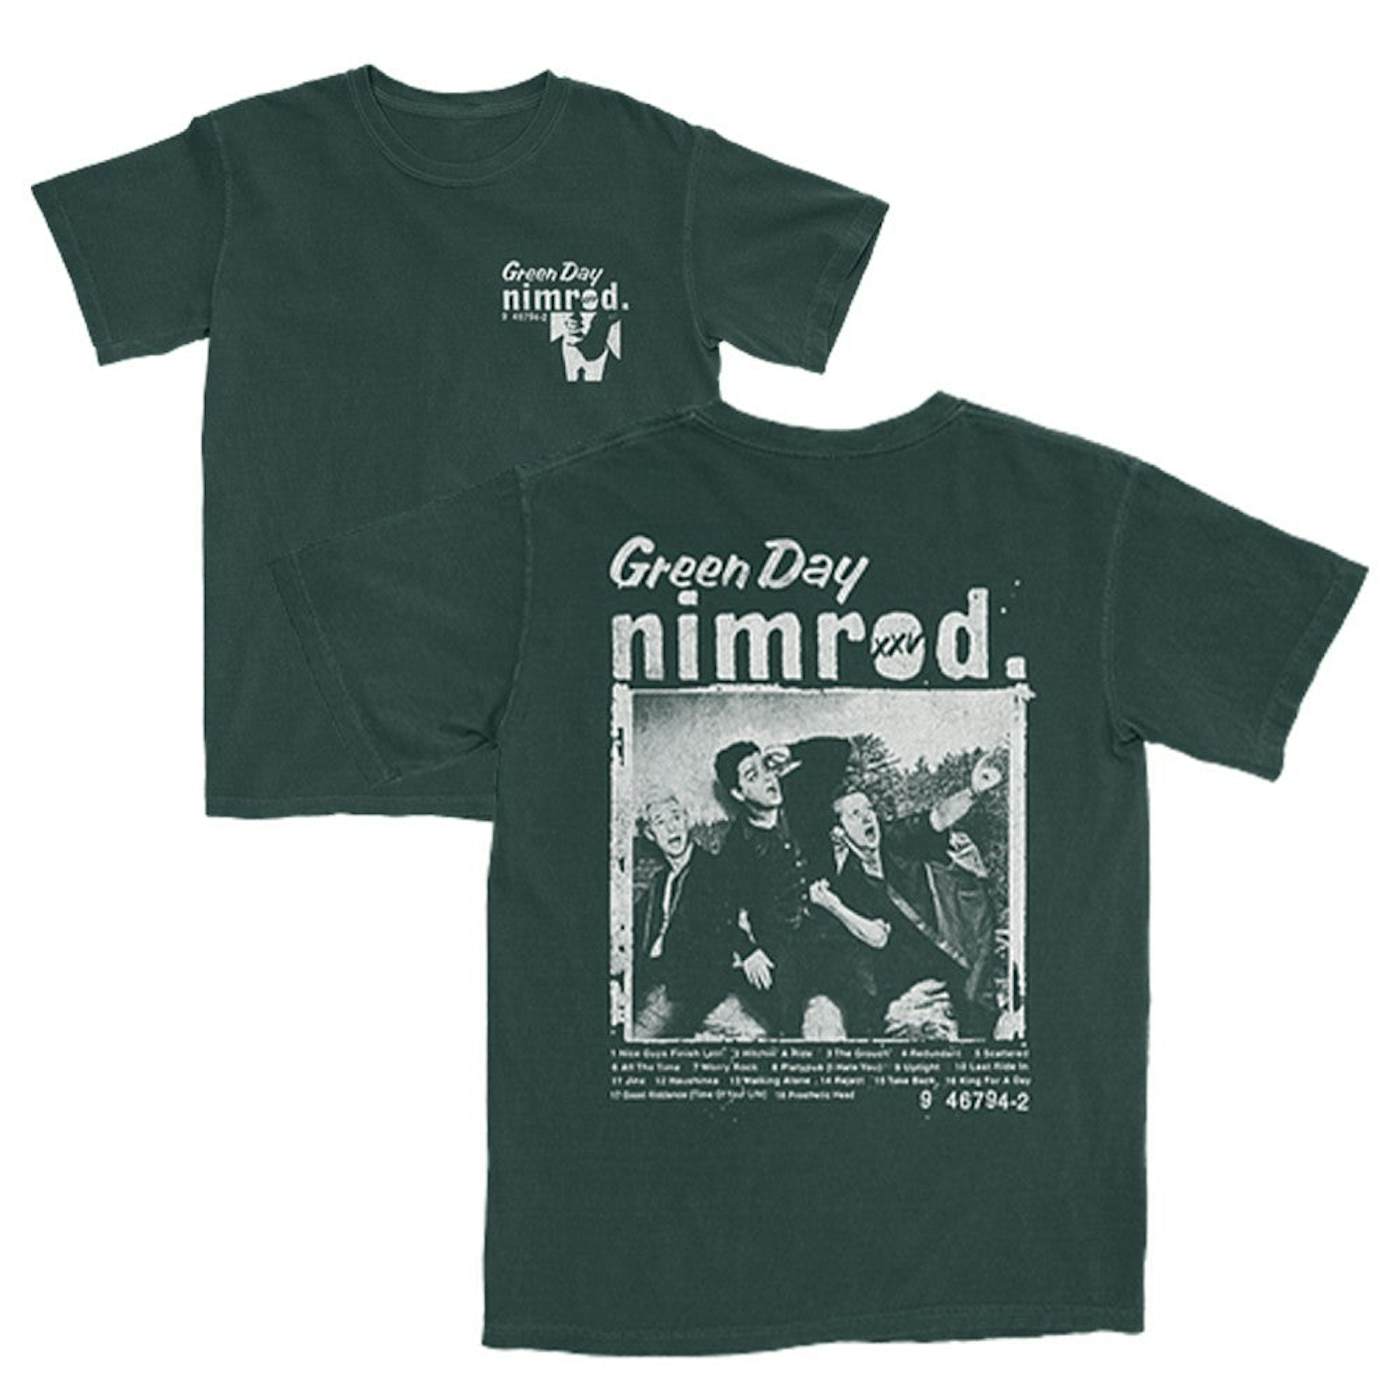 Green Day vinyl records, CDs, T-shirts